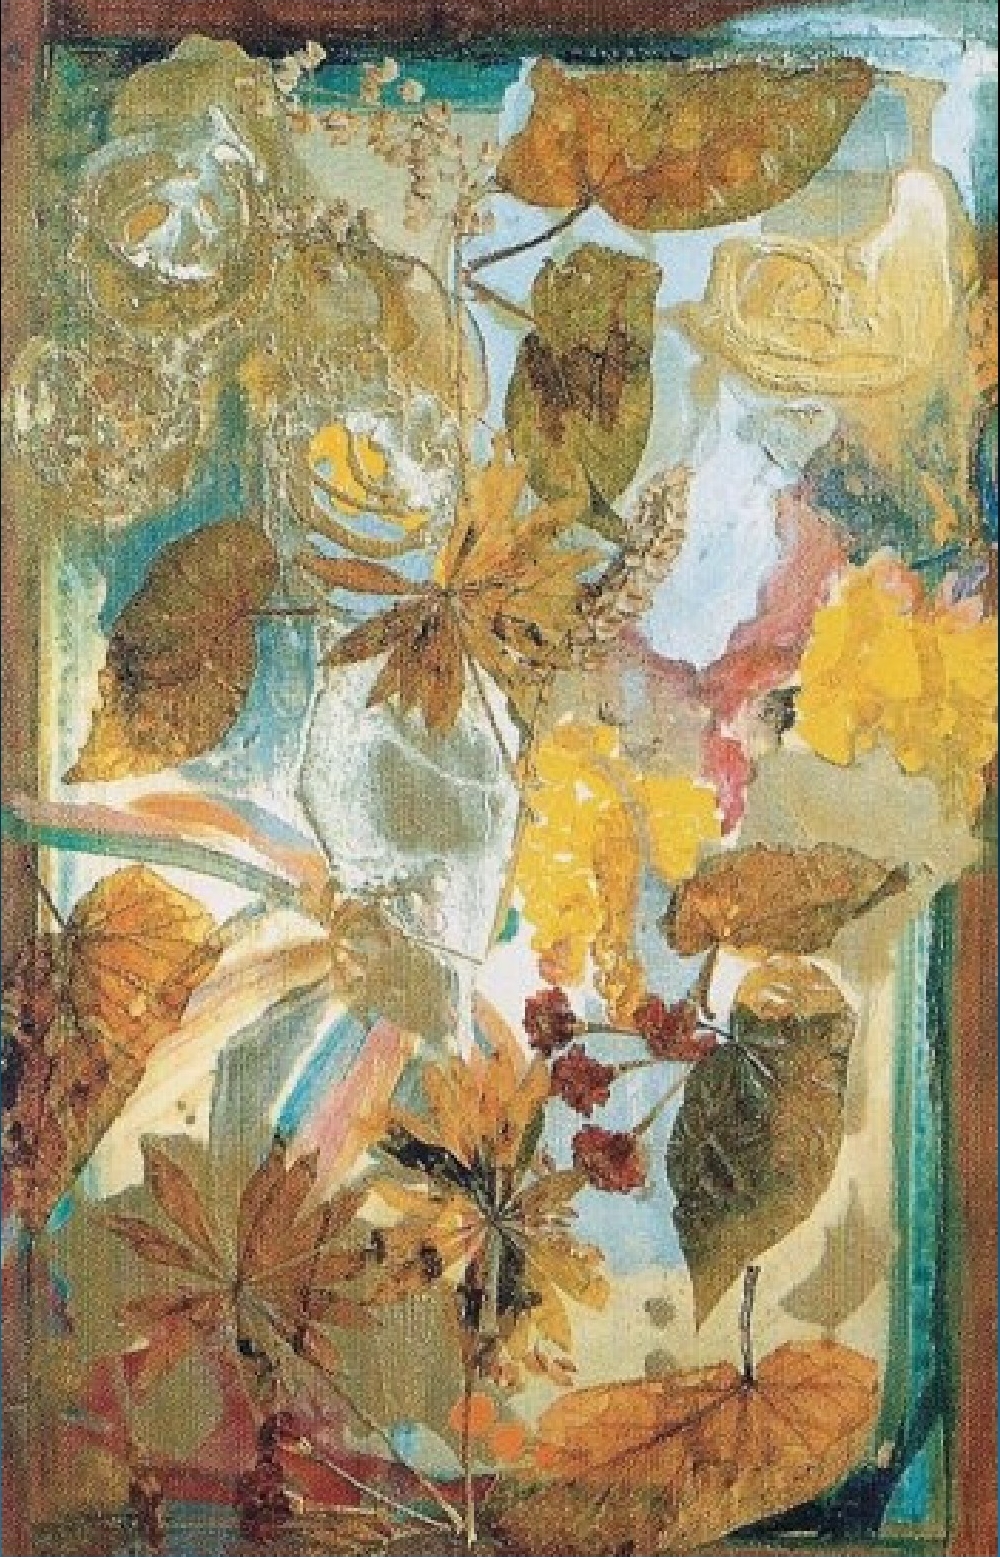 "Begonias" Light Panel Painting Rumyanka Bozhkova